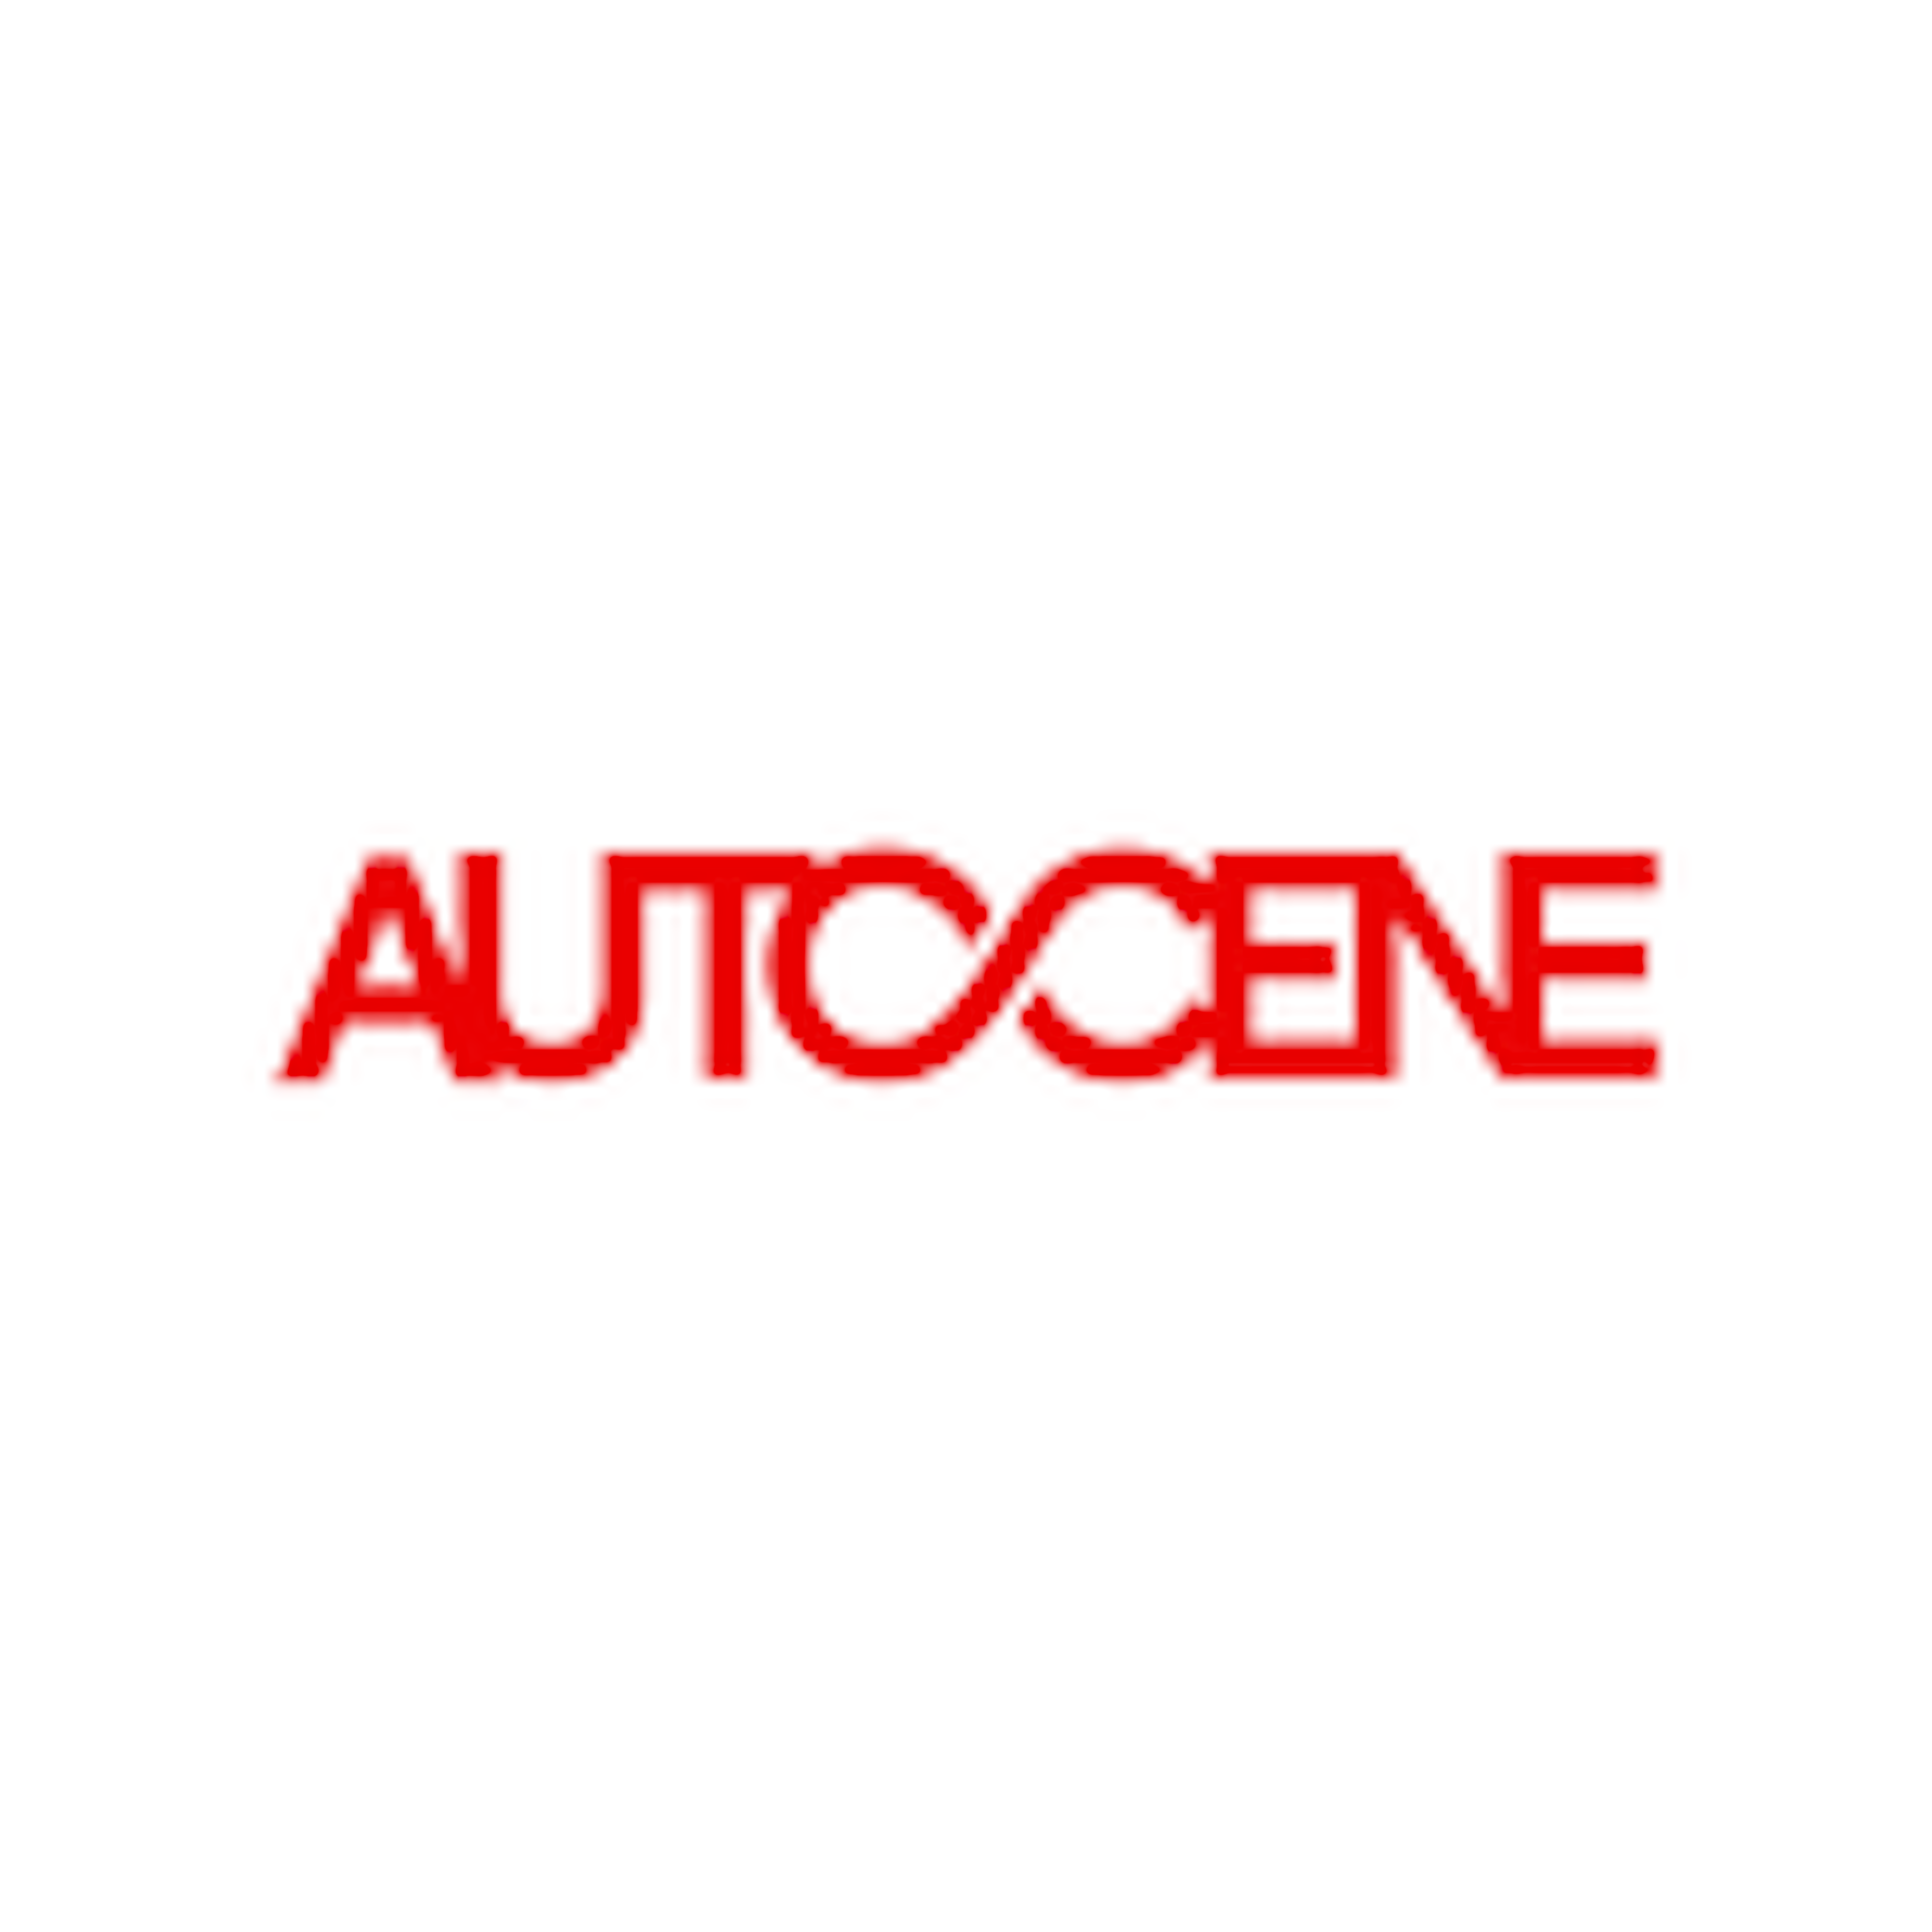 Autocene Logo